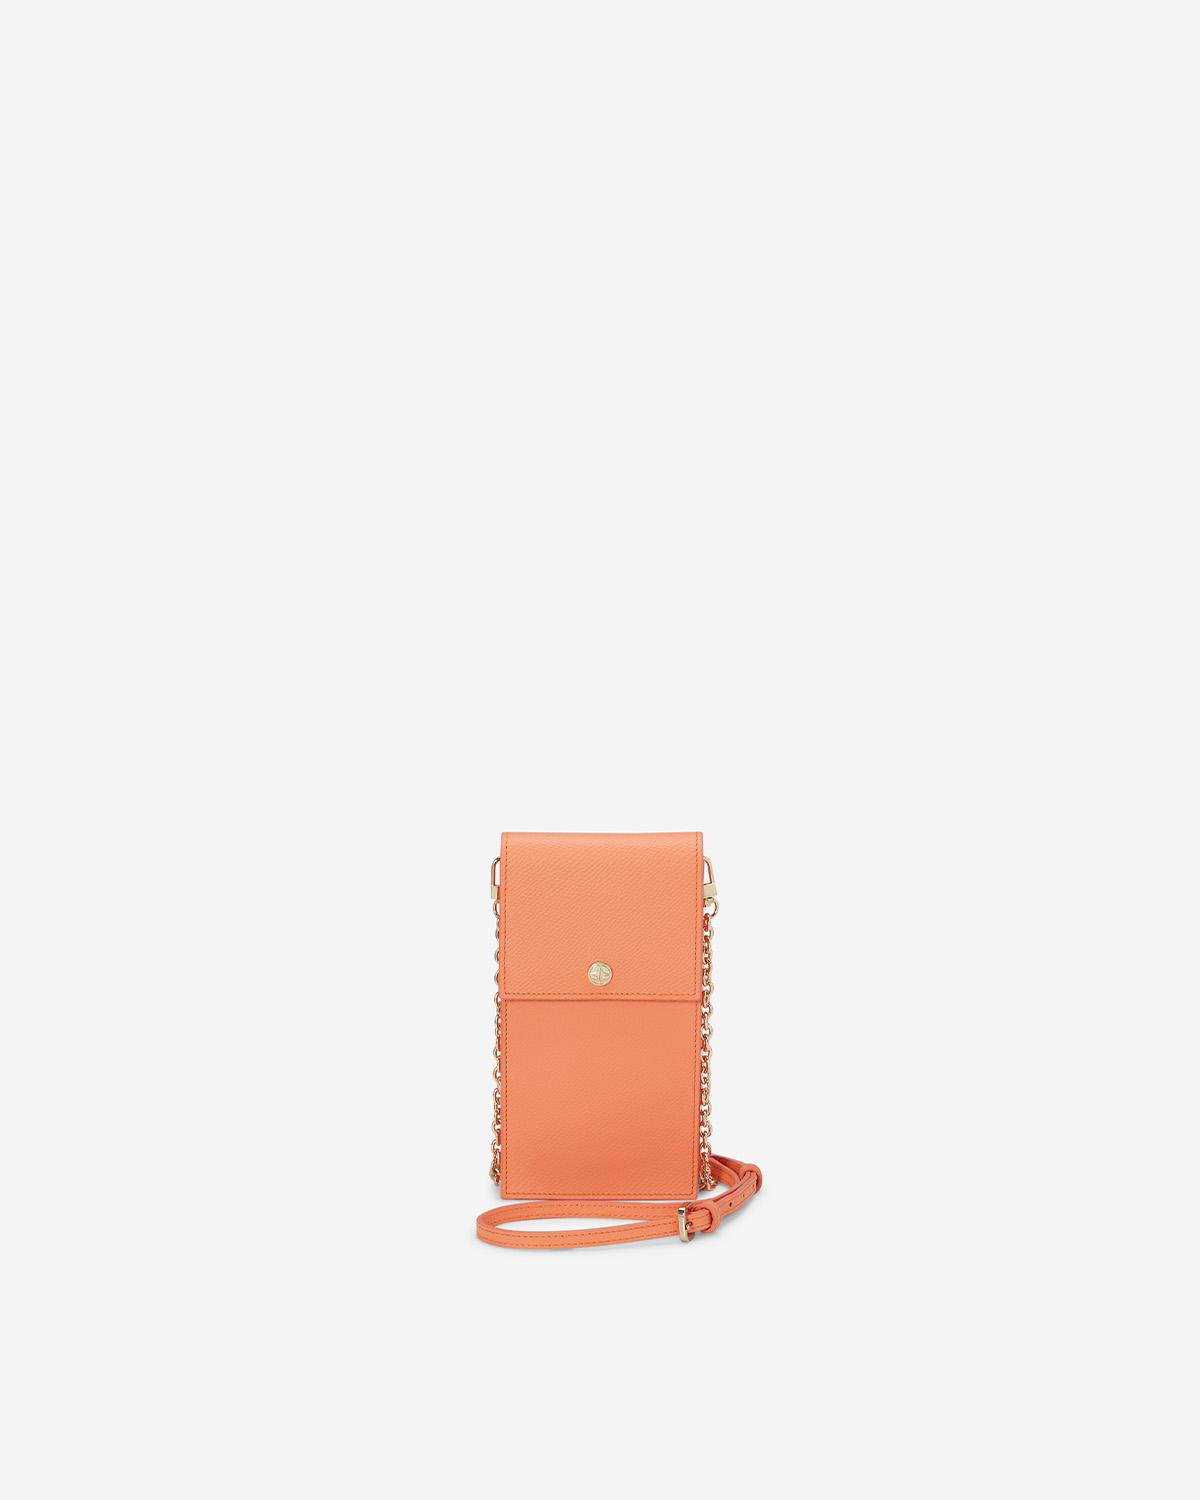 VERA Emily Phone Pouch with Leather Gold Chain in Joyful Orange กระเป๋าใส่โทรศัพท์หนังแท้ พร้อมฟังก์ชั่นกระเป๋าสตางค์ มาพร้อมสายสะพายโซ่หนังถอดได้ สีส้ม